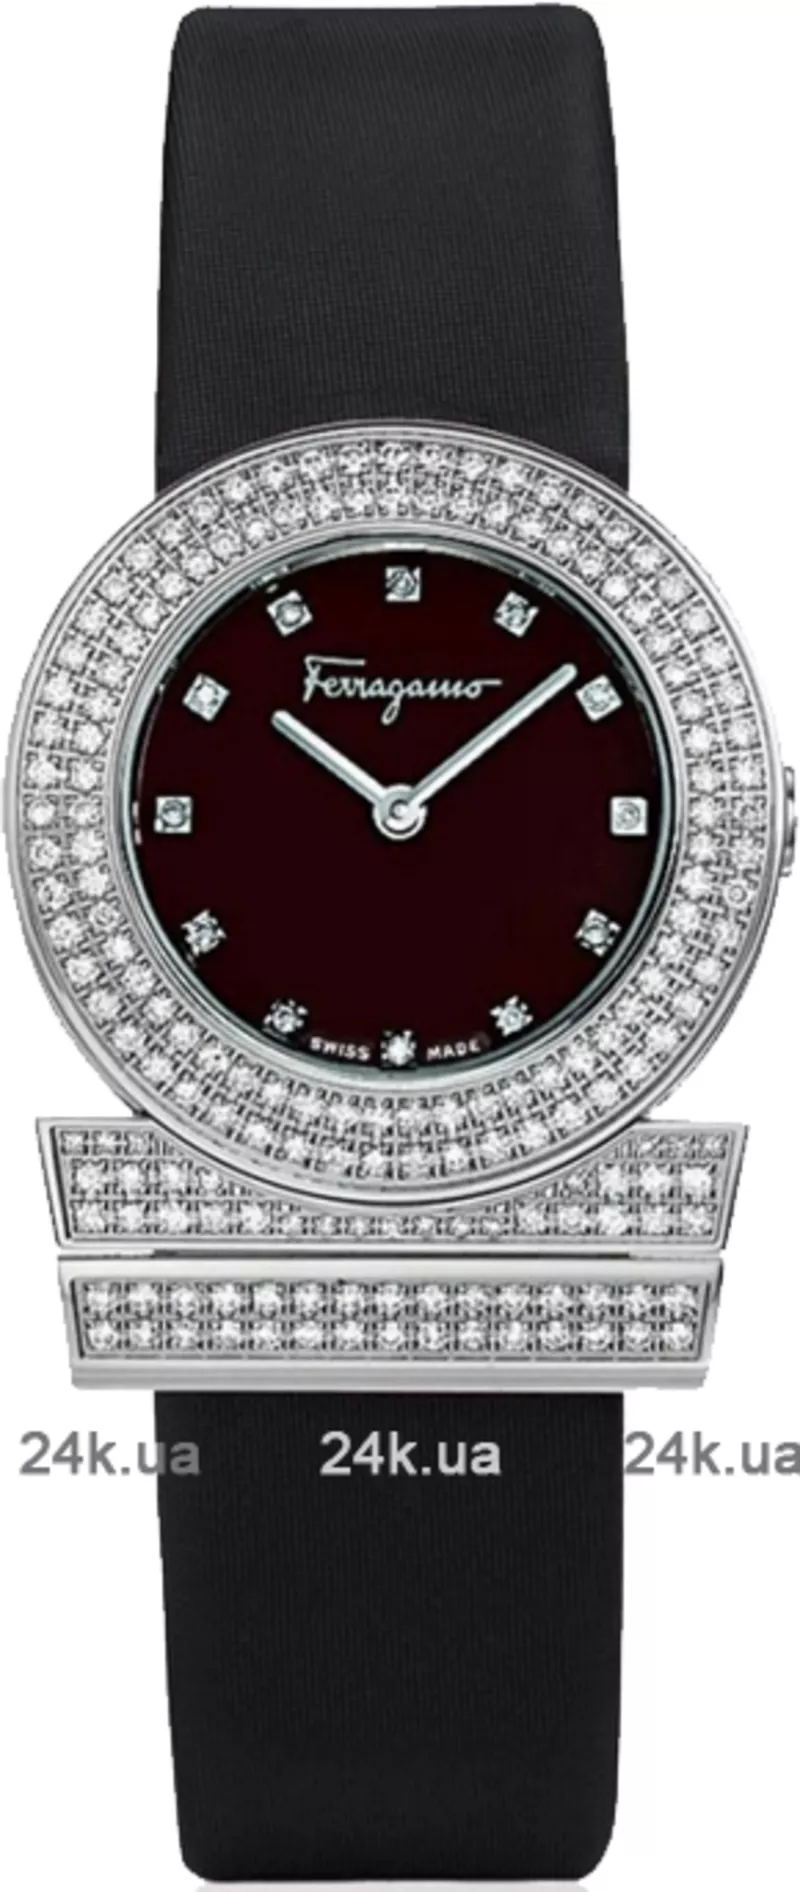 Часы Salvatore Ferragamo Fr56sbq9109is009